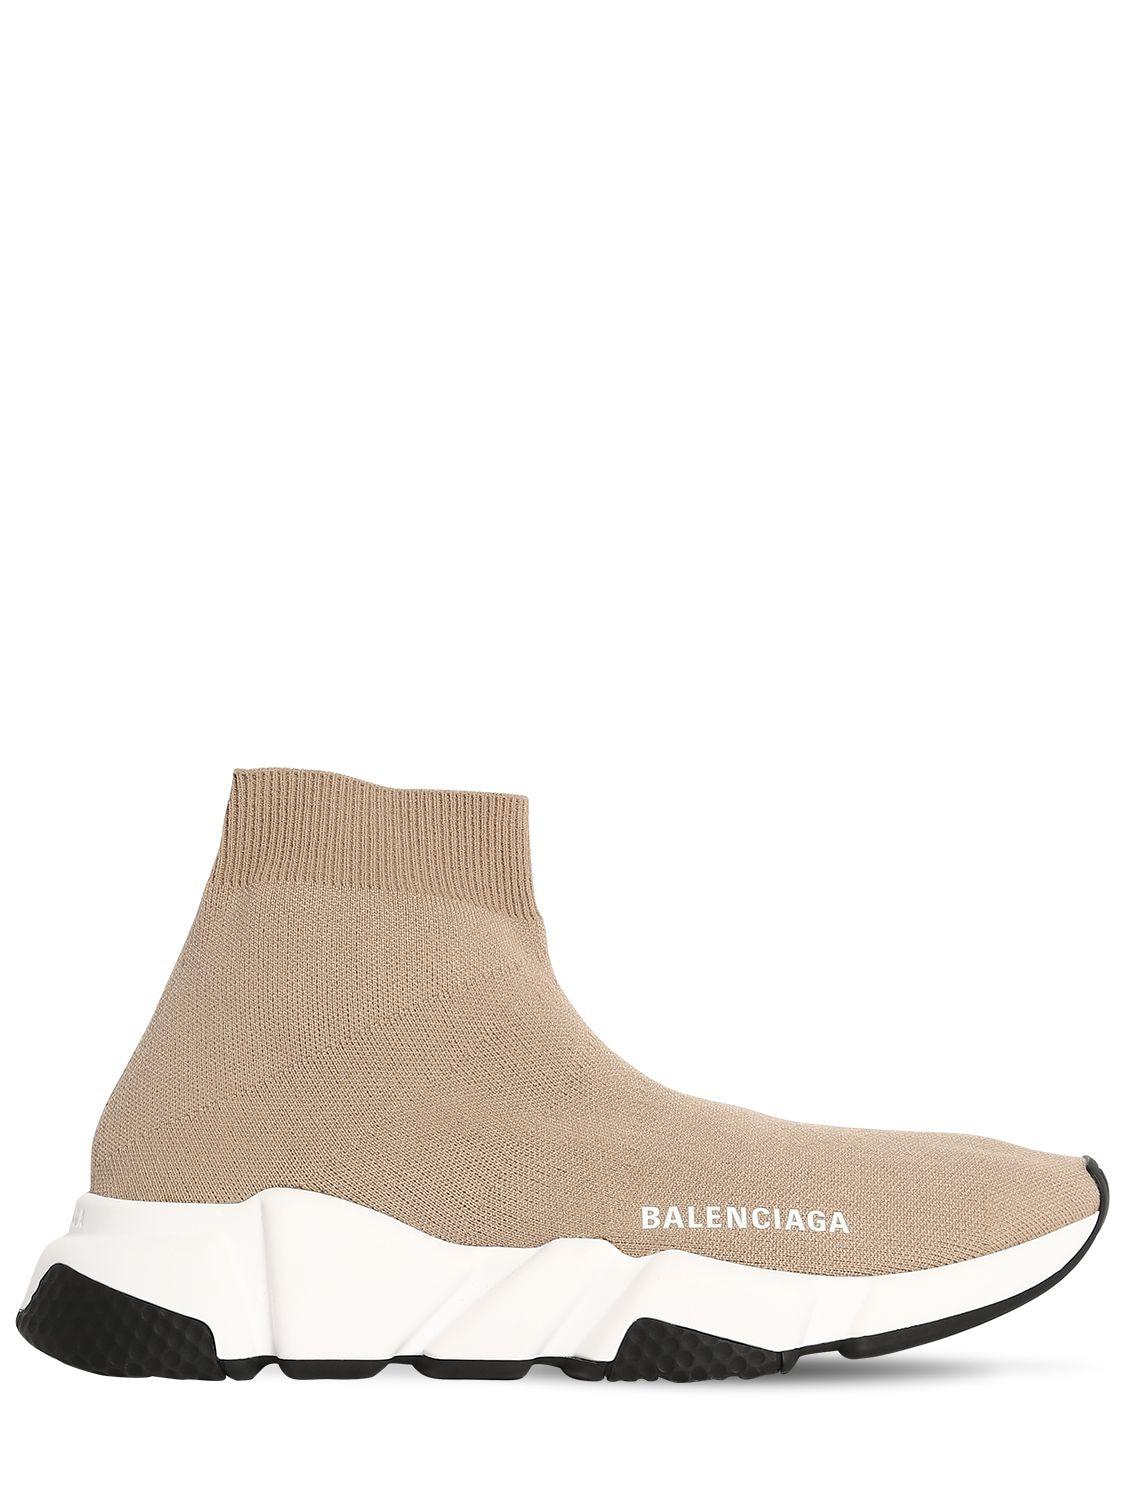 Balenciaga Speed Sneaker in Natural | Lyst